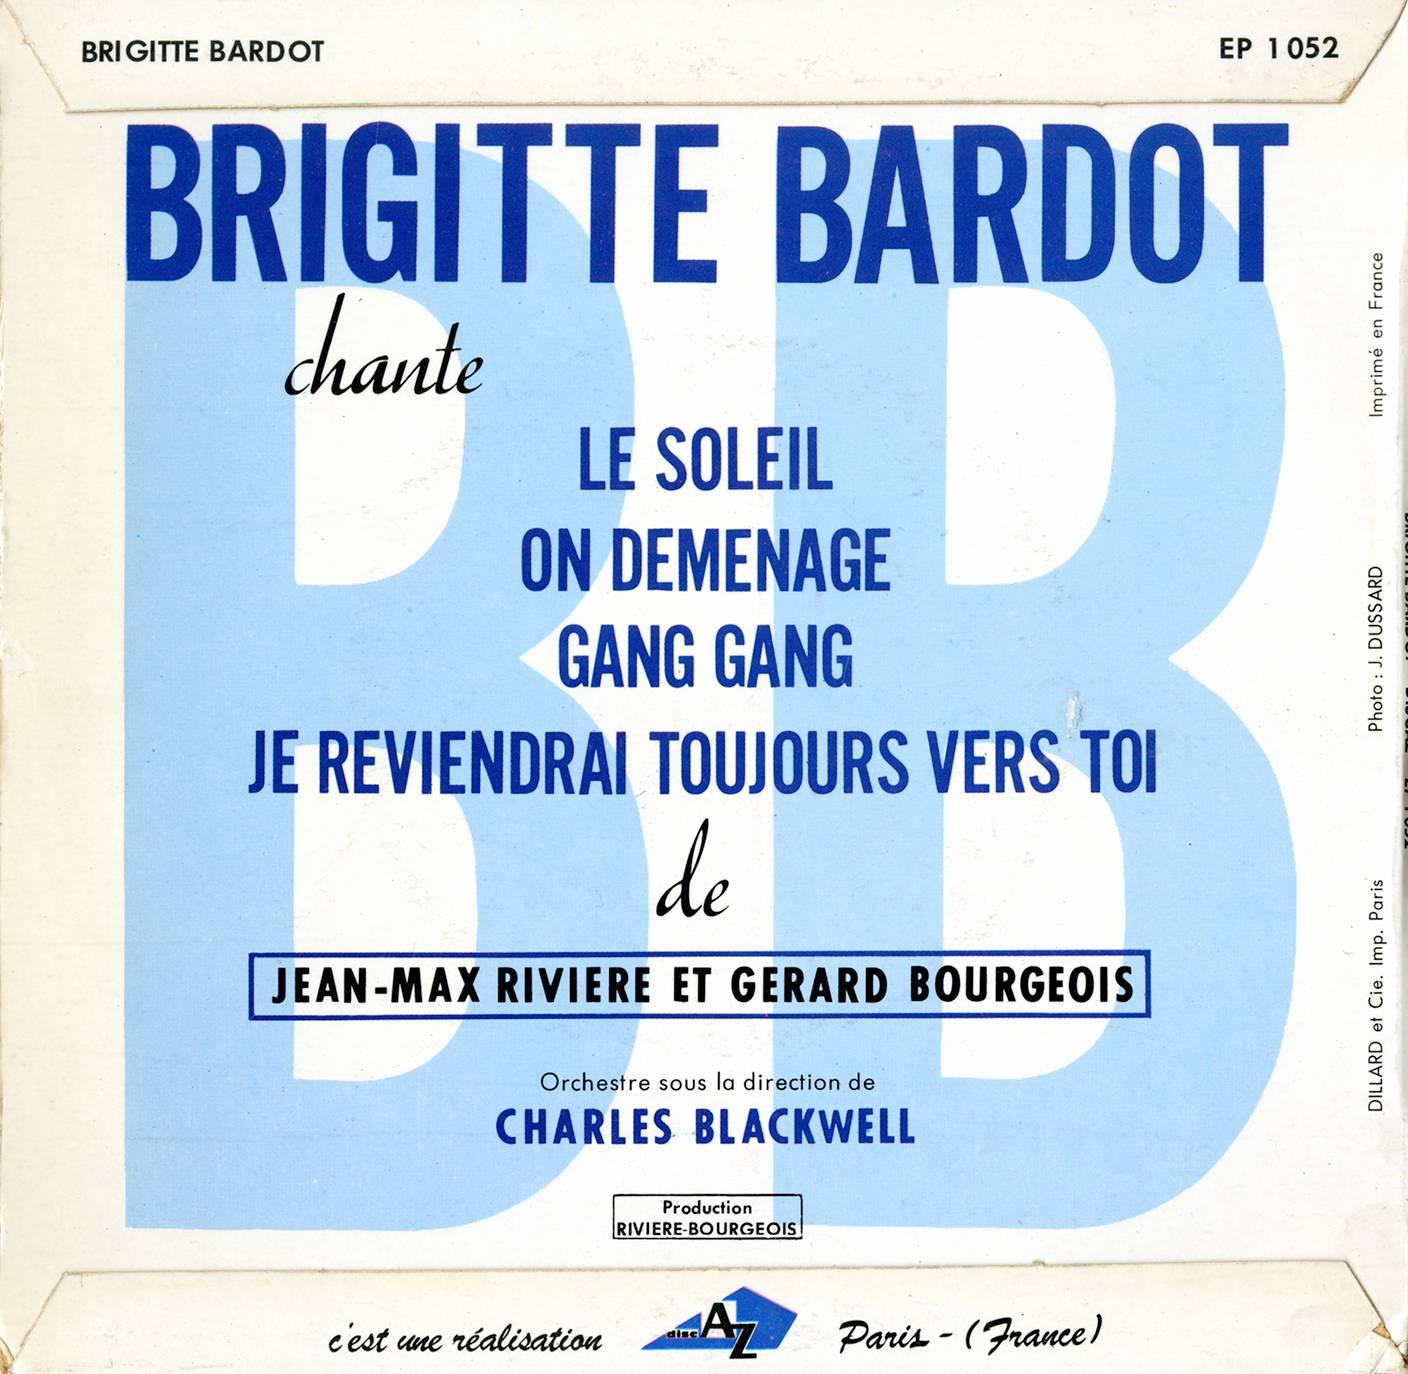 Vintage Brigitte Bardot Vinyl Record - Pop Art Art by Unknown